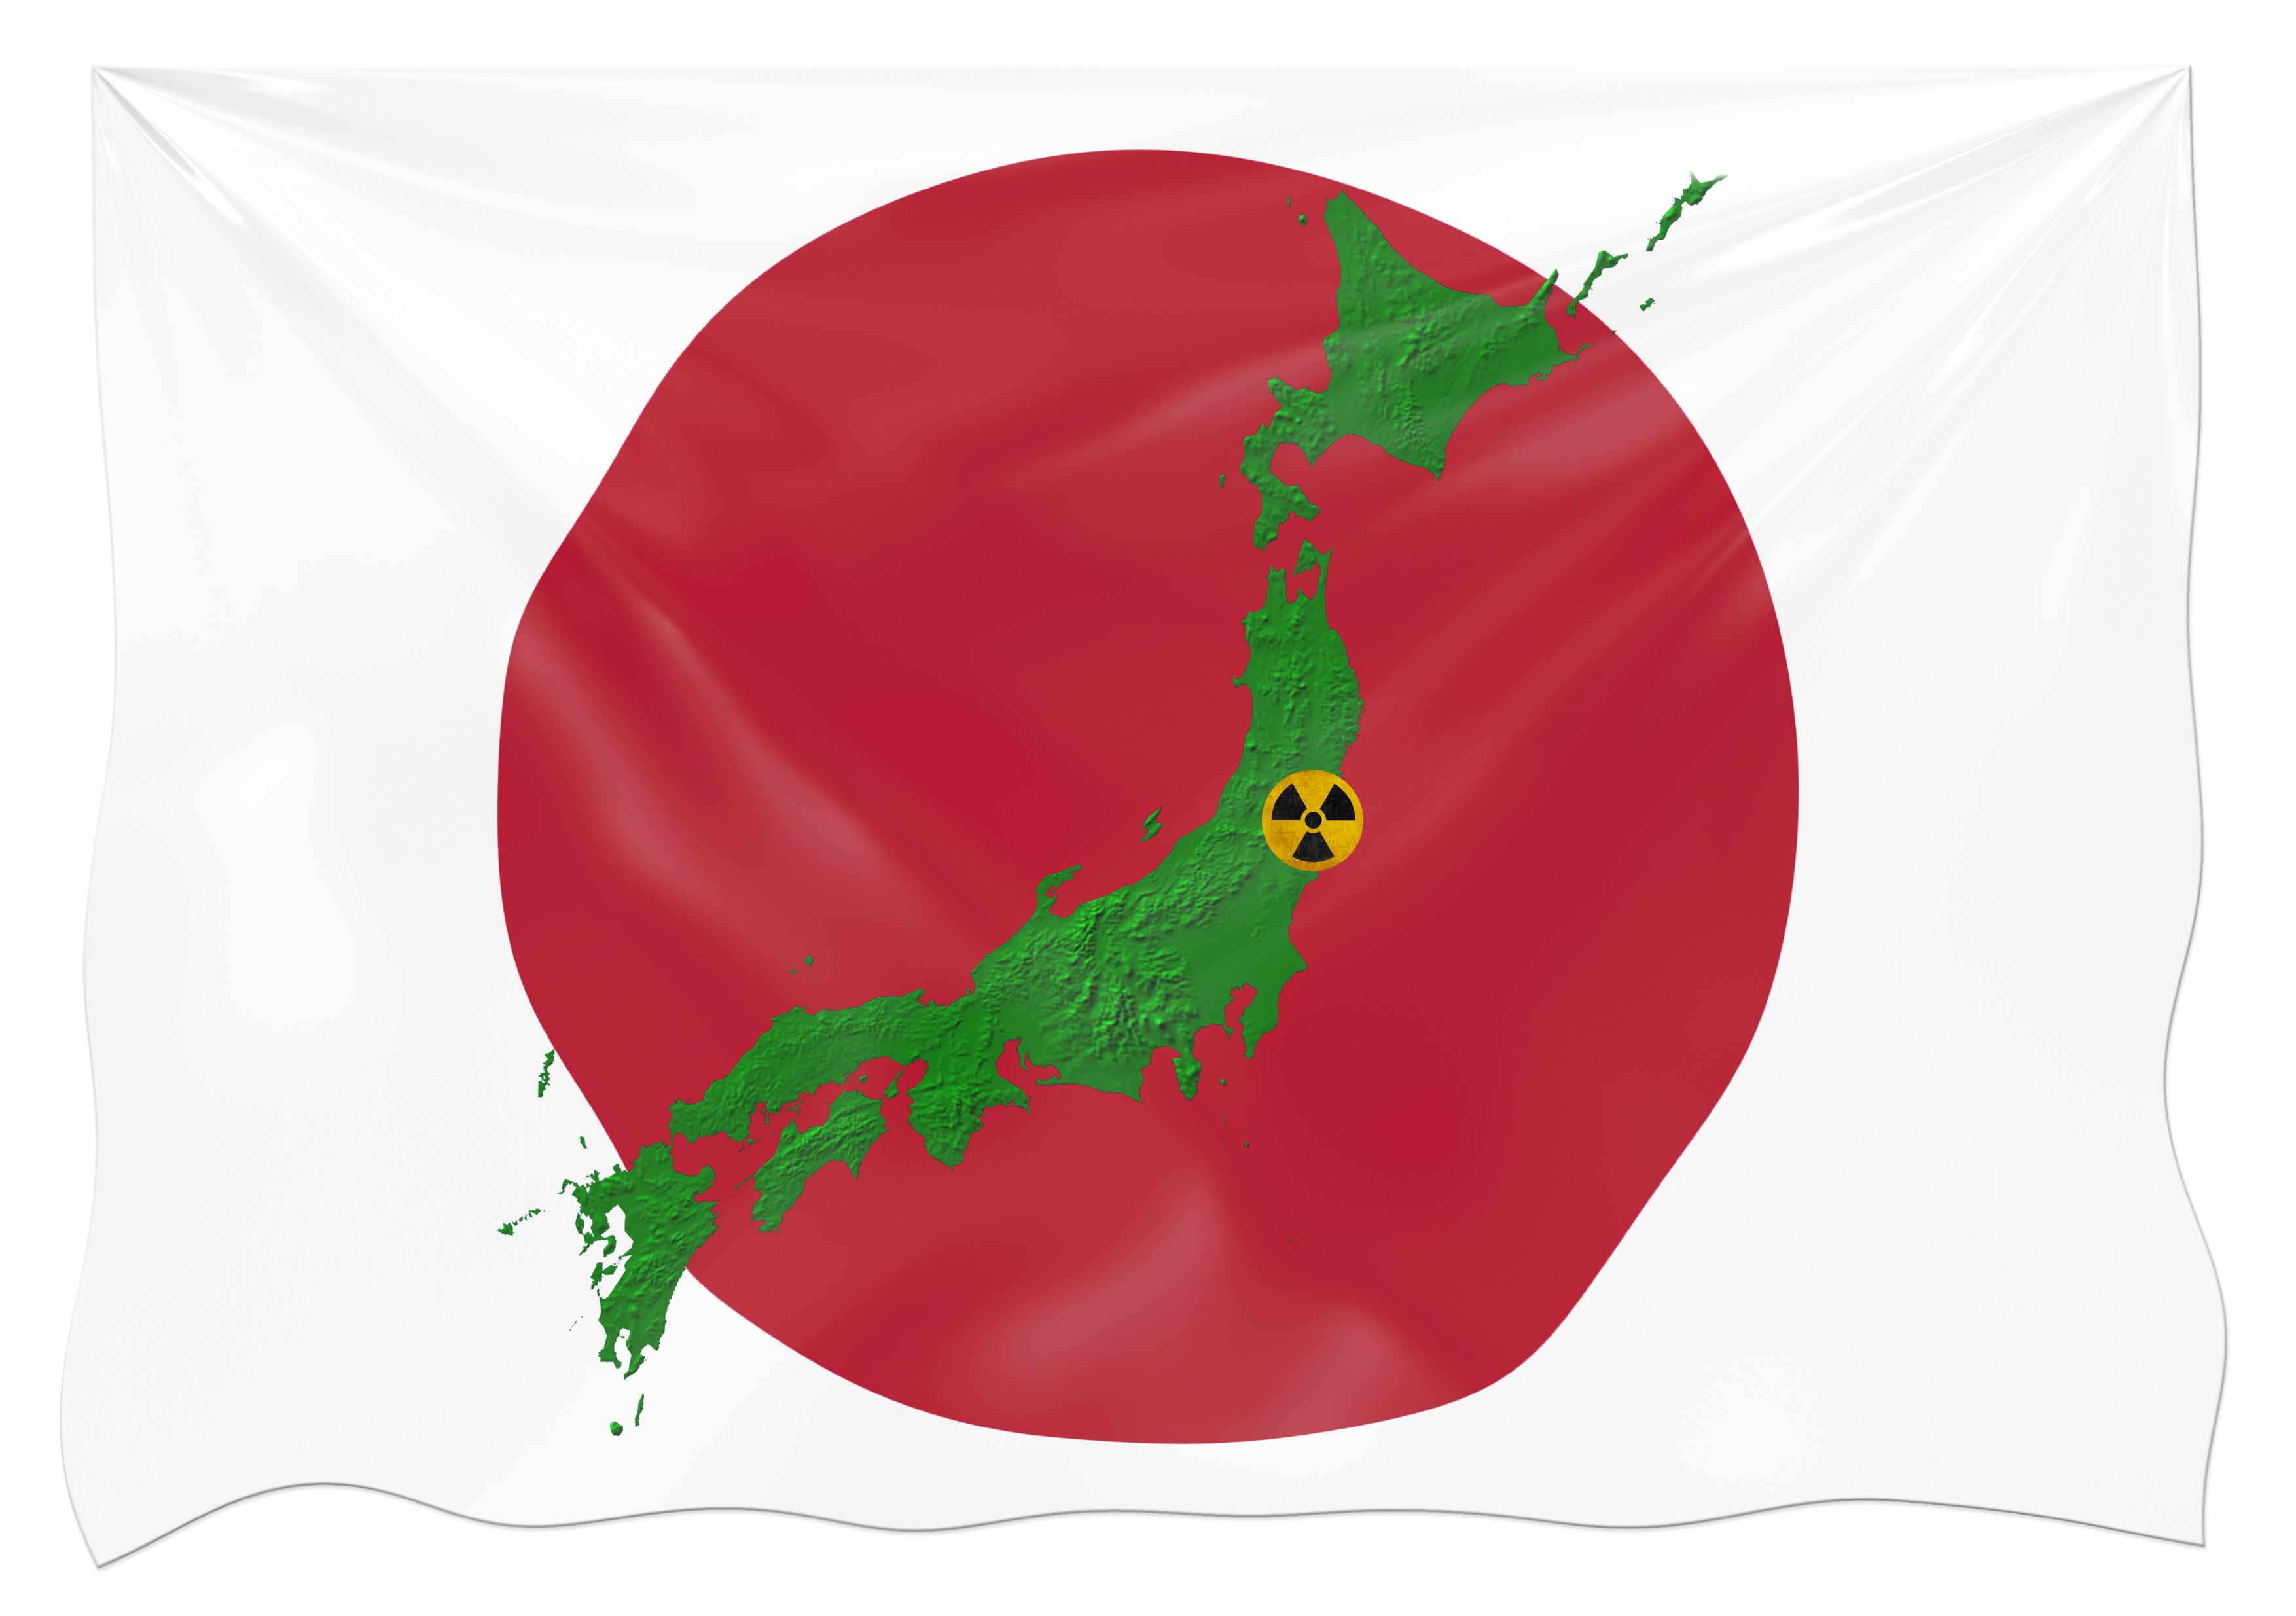 The Fukushima Nuclear Power Plant disaster, Japan 2011